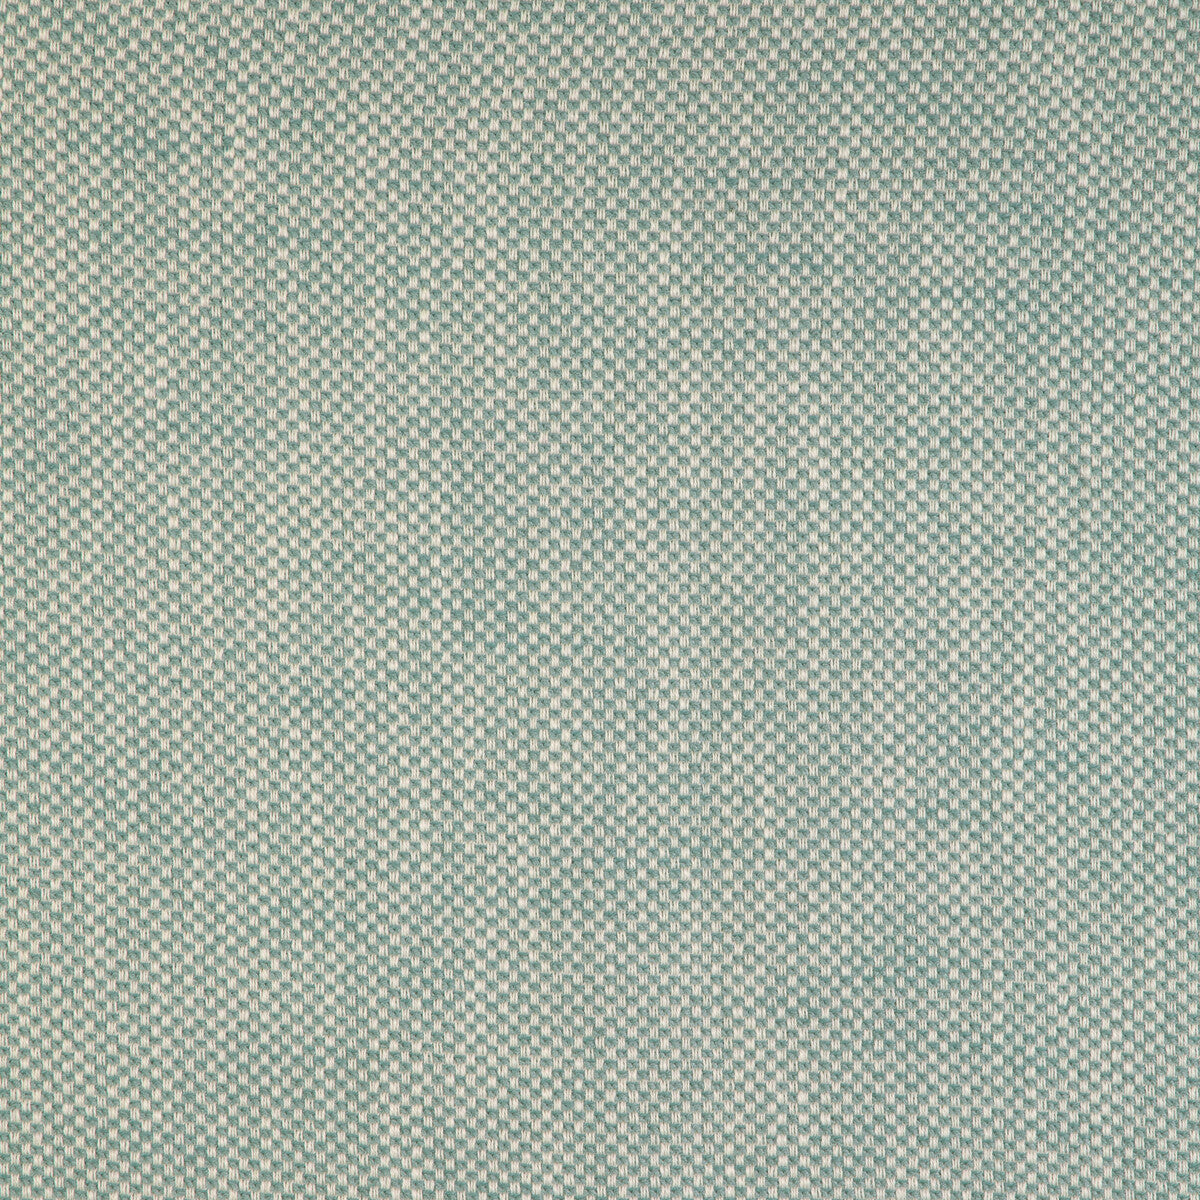 Kravet Smart fabric in 36999-15 color - pattern 36999.15.0 - by Kravet Smart in the Pavilion collection